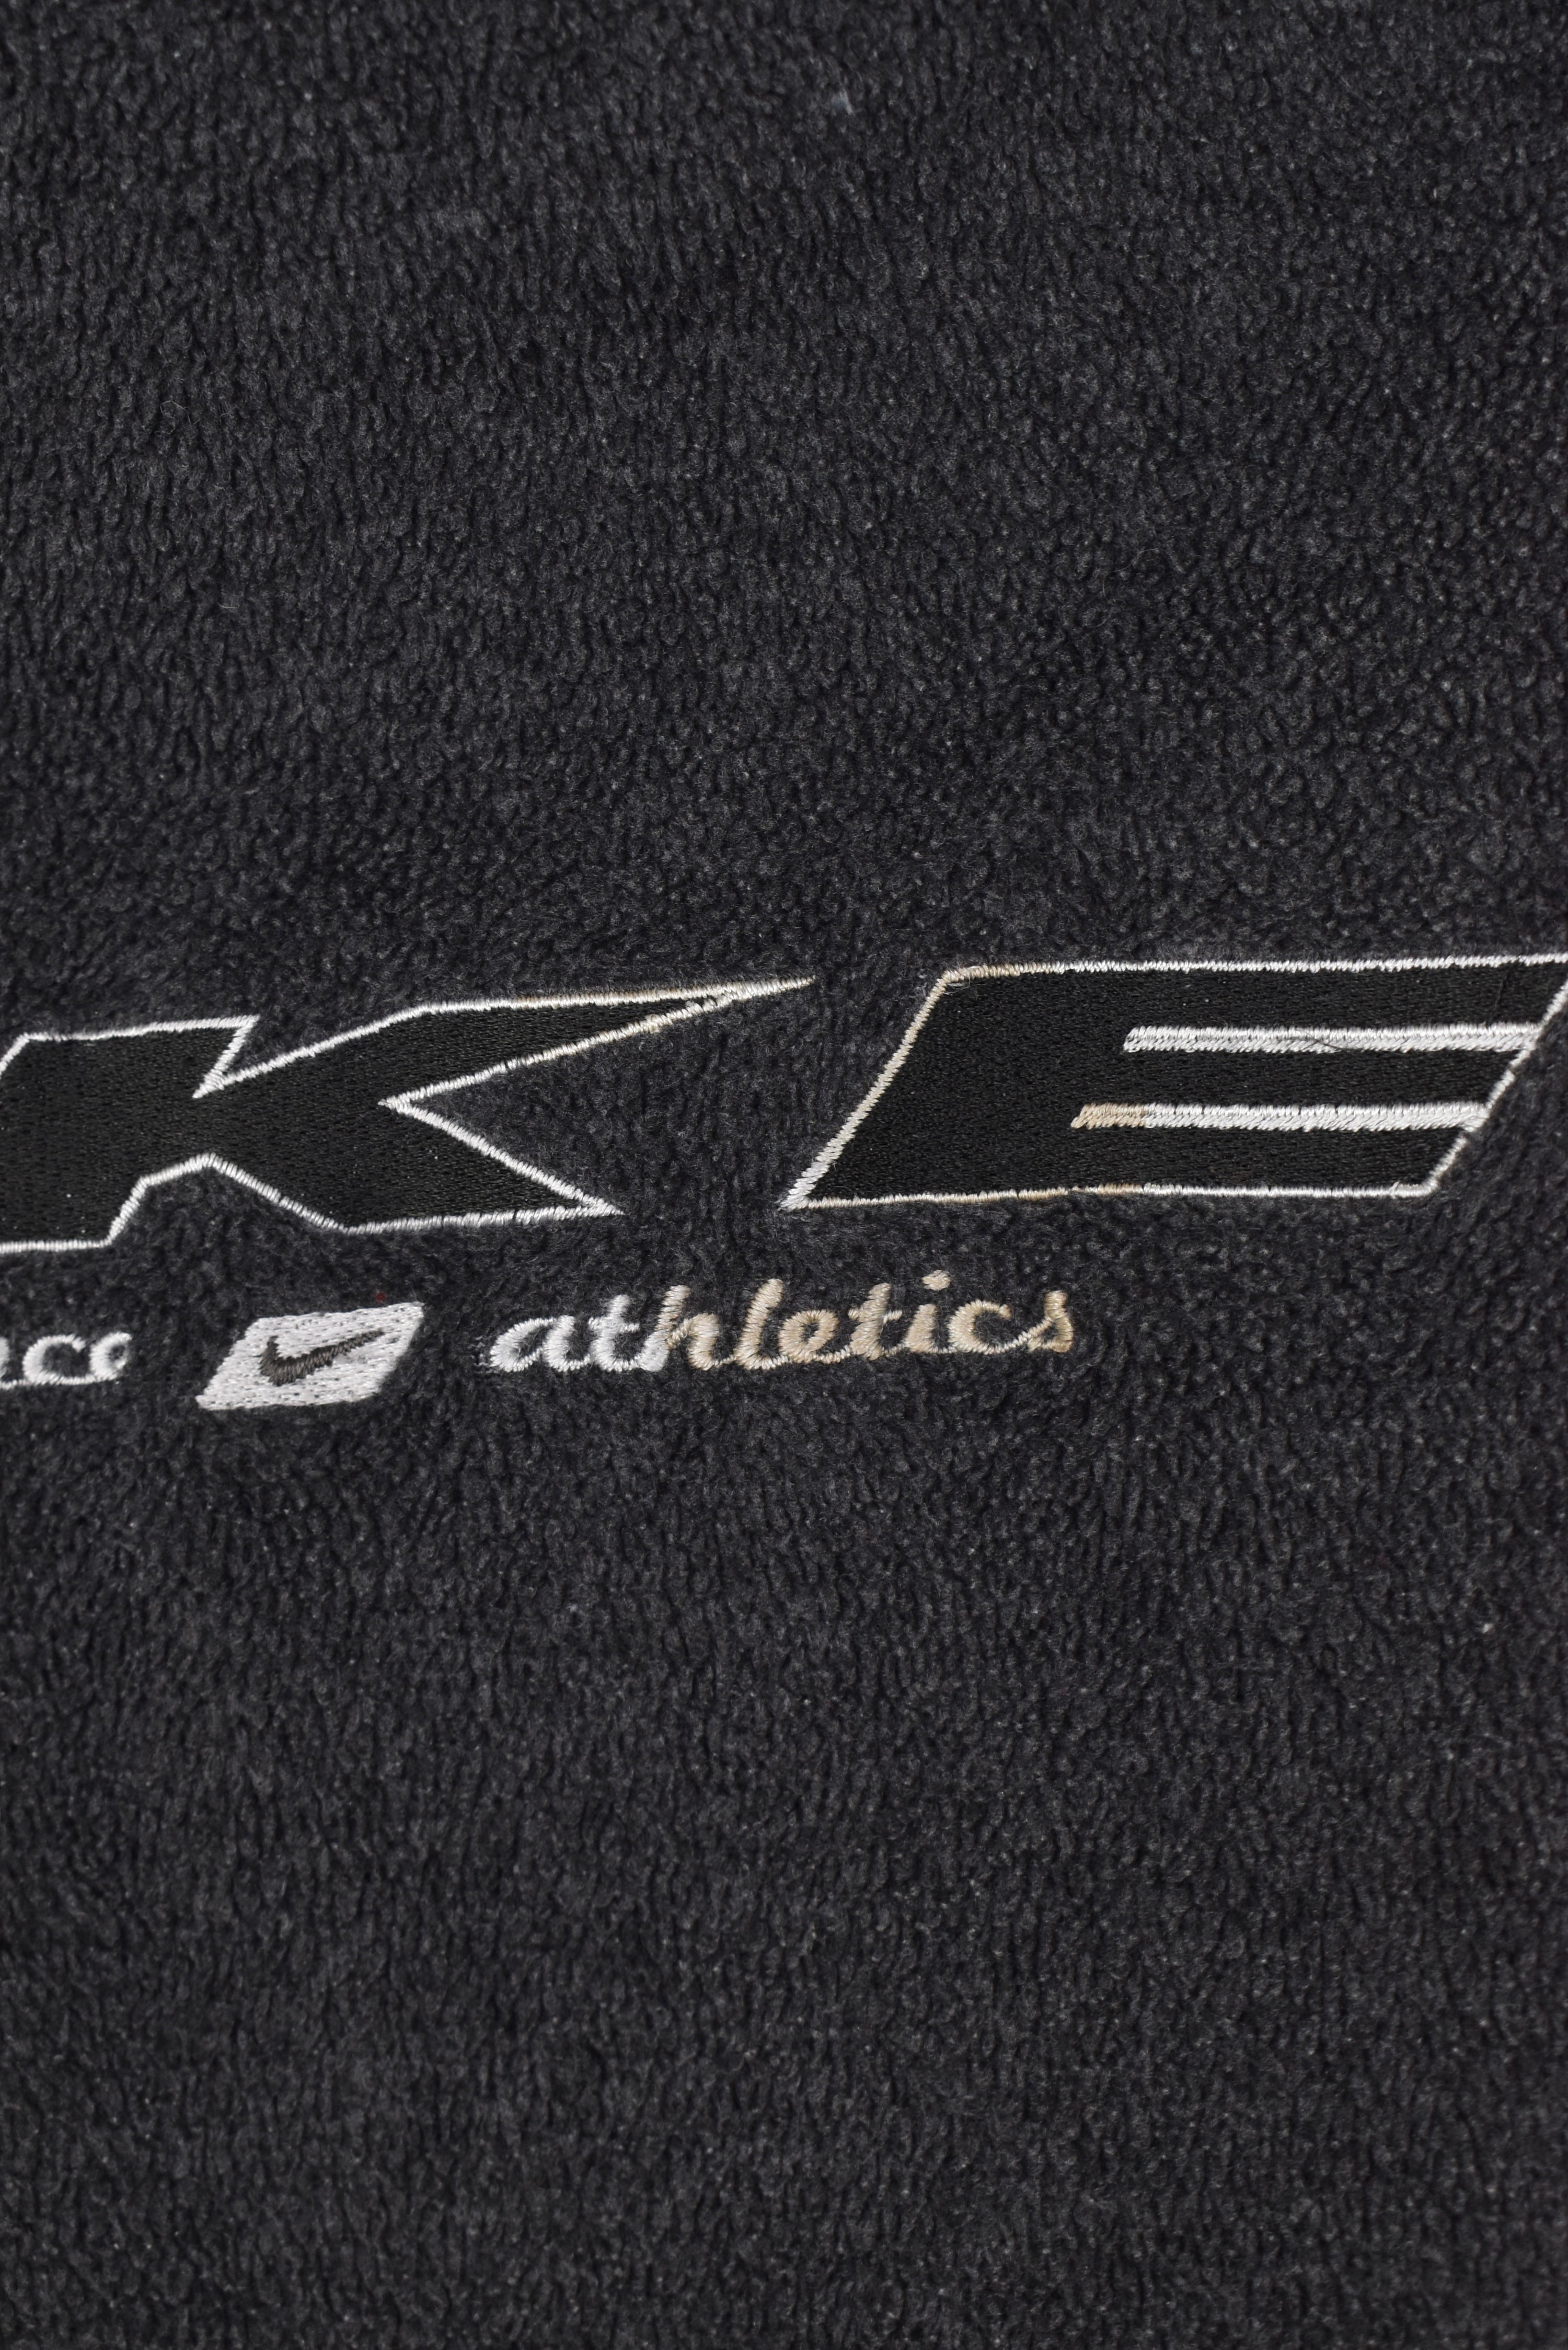 Vintage Nike hoodie, black embroidered fleece sweatshirt - XL